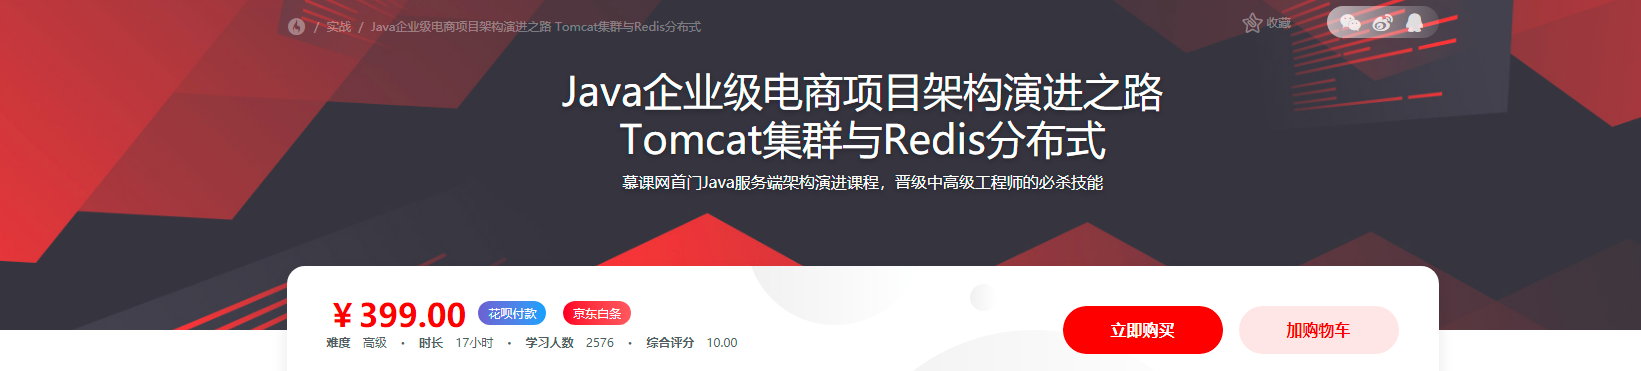 Java企业级电商项目架构演进之路 Tomcat集群与Redis分布式-1